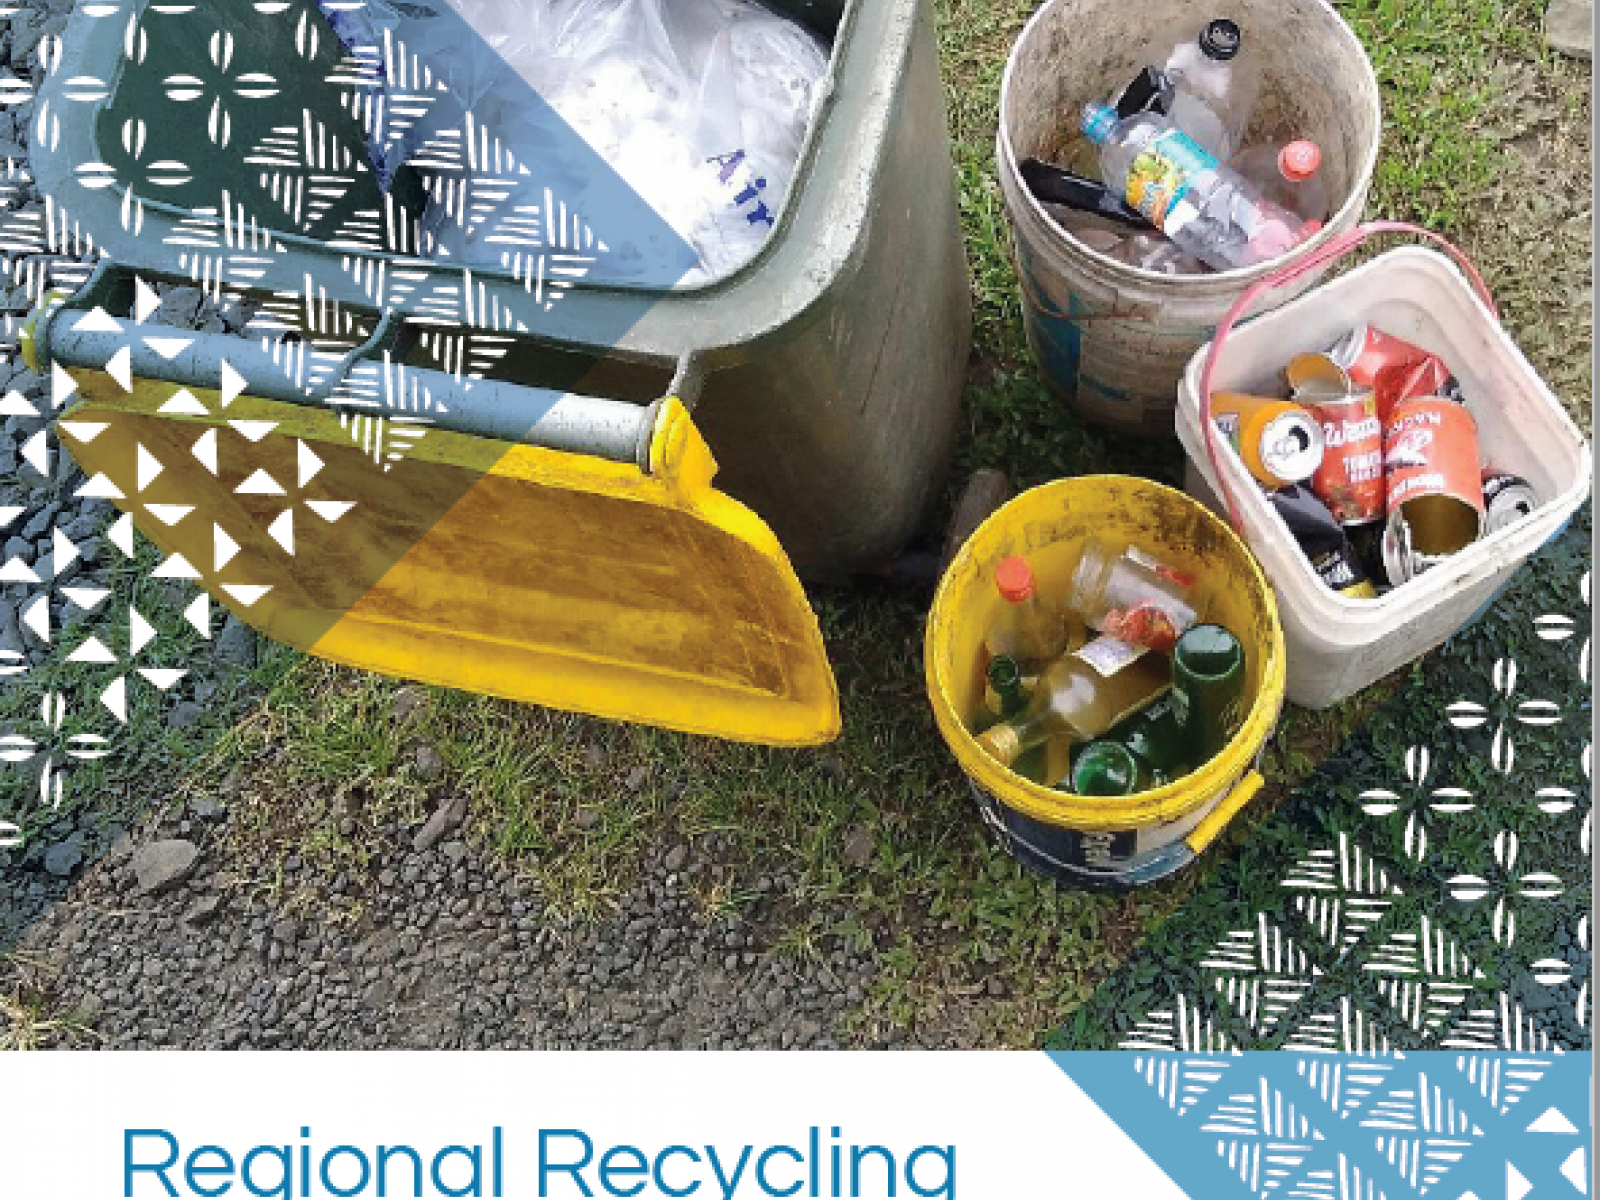 Regional recycling center scoping study